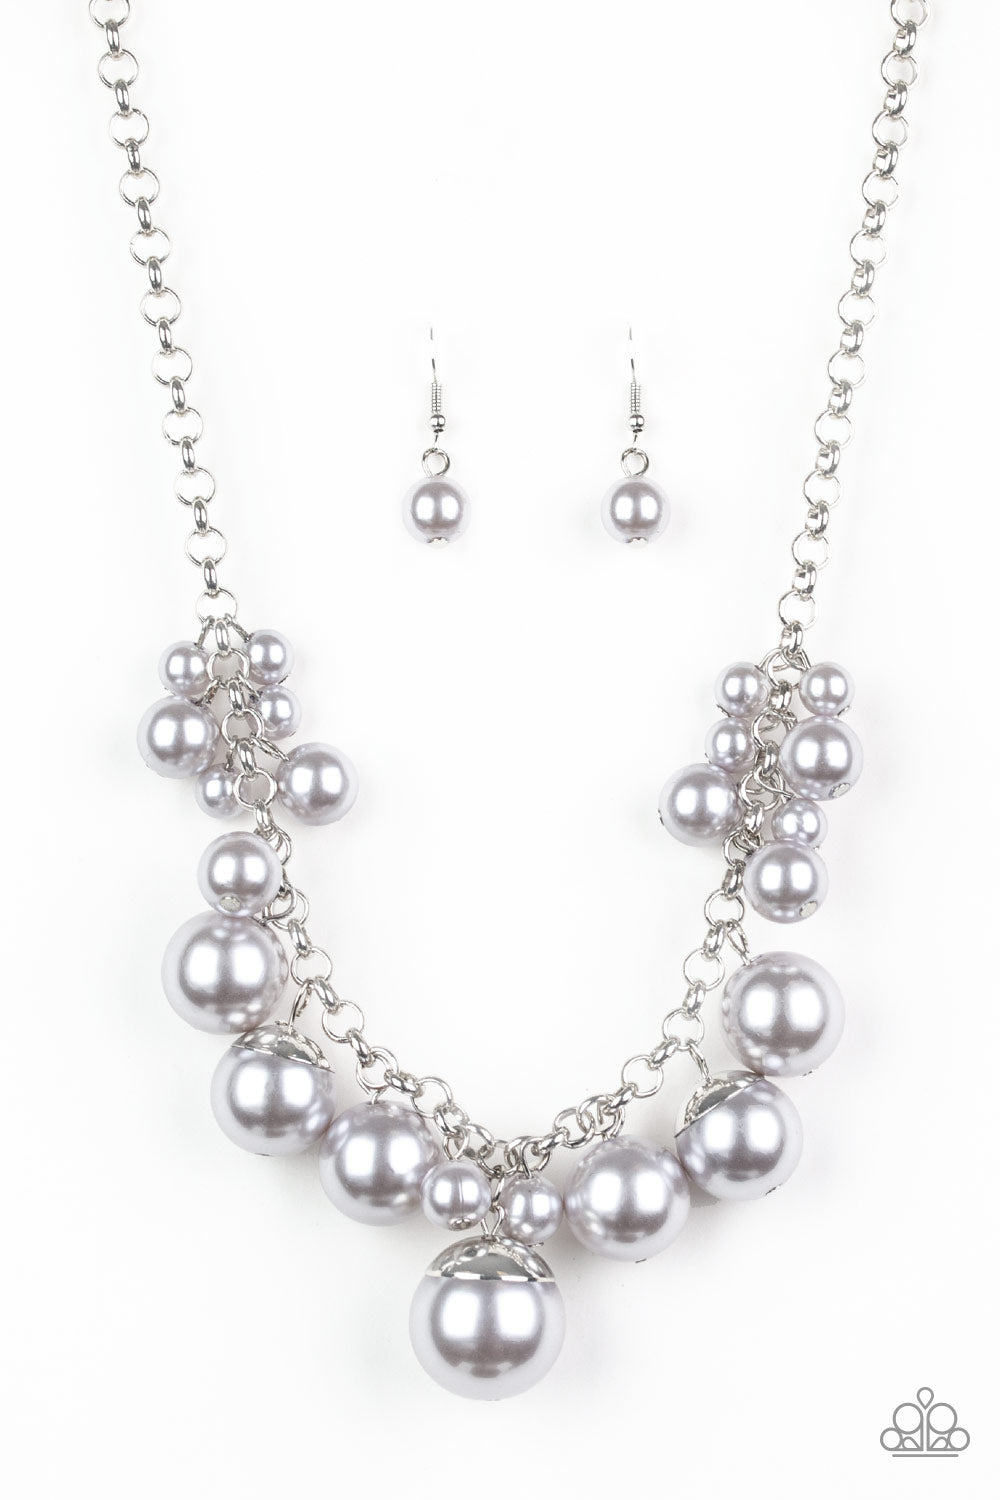 Paparazzi Necklaces - Broadway Belle - Silver